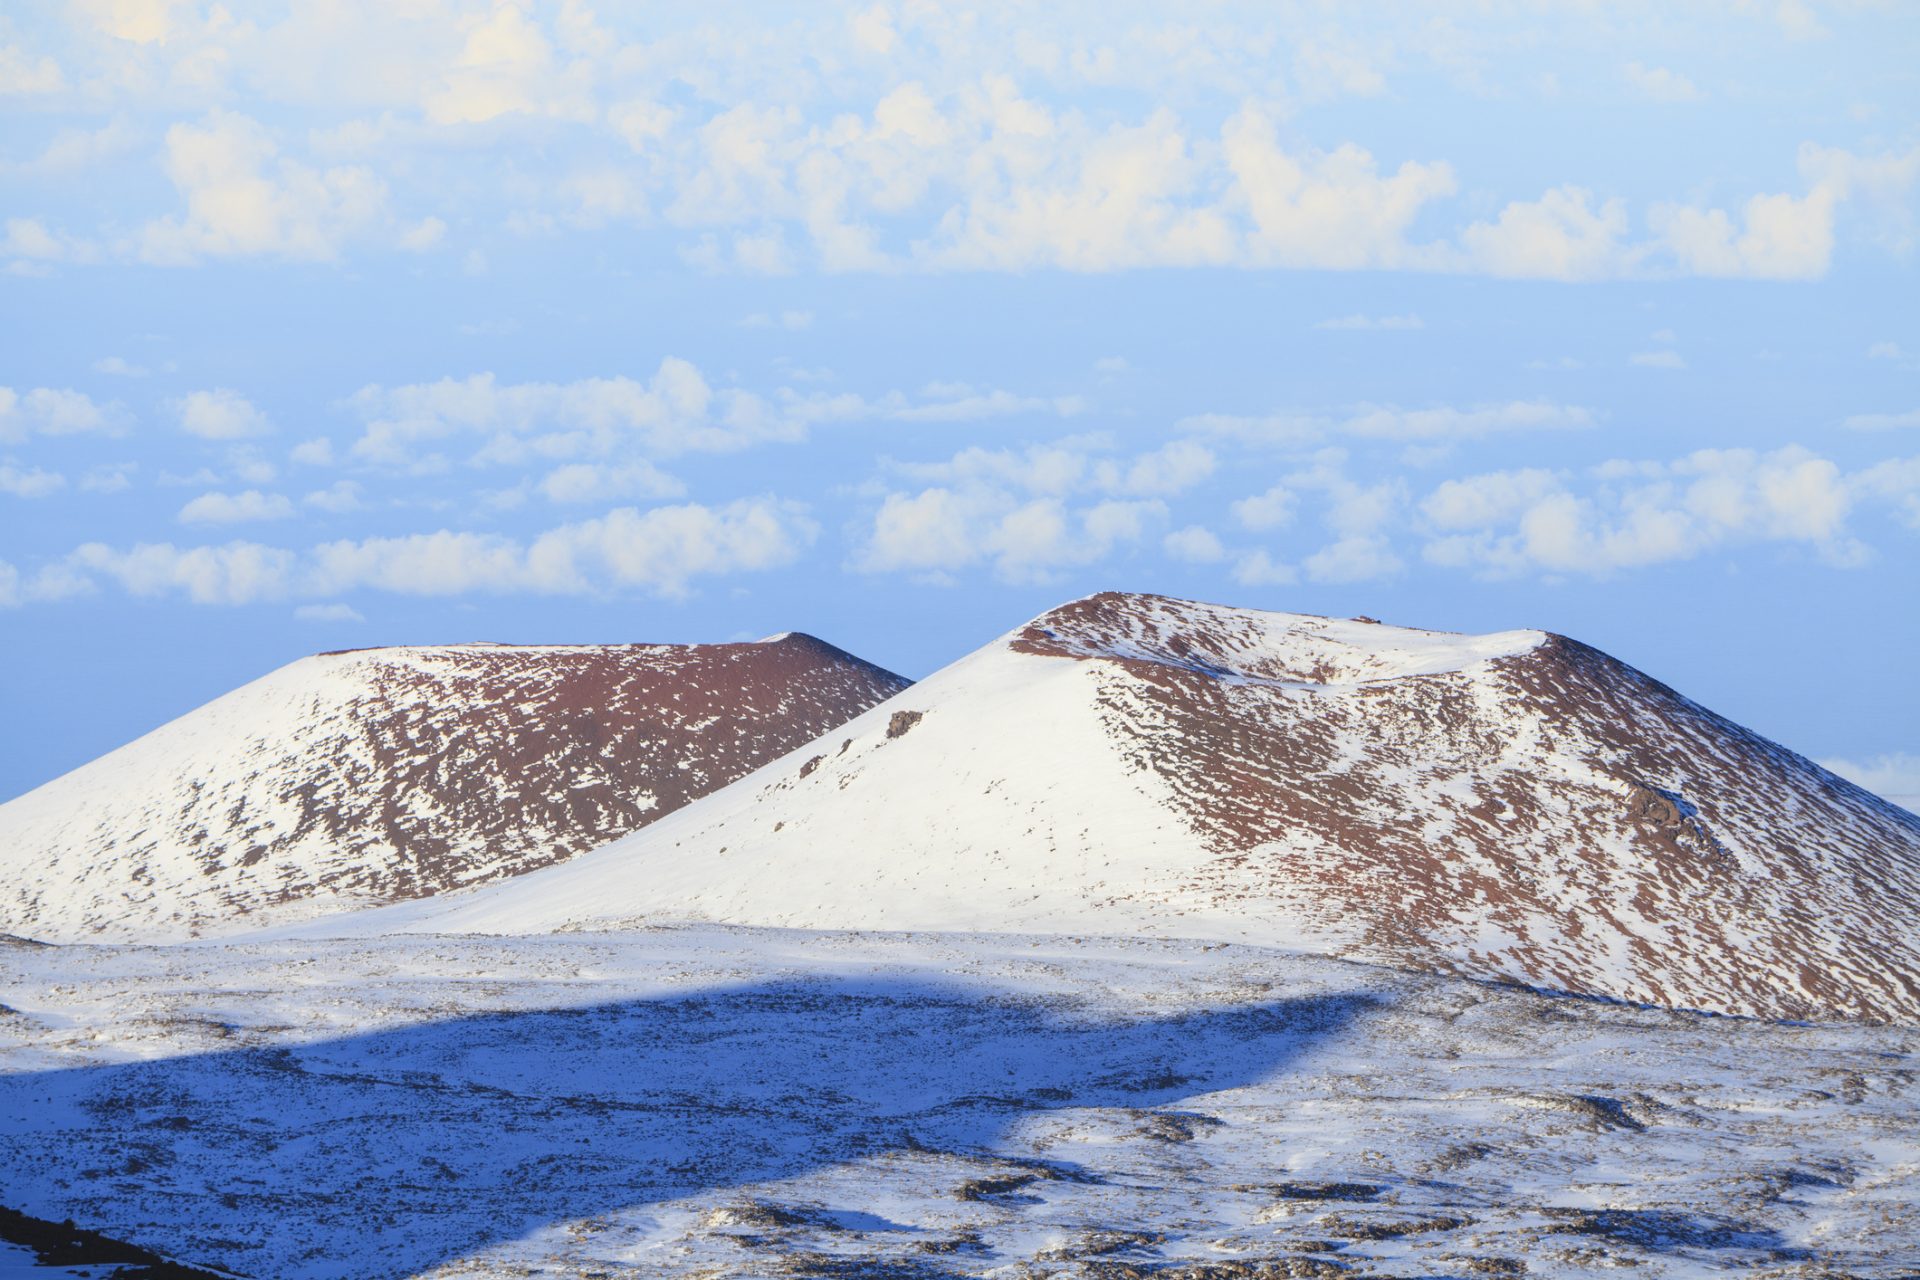 Mauna Kea: the tallest mountain from base to peak 